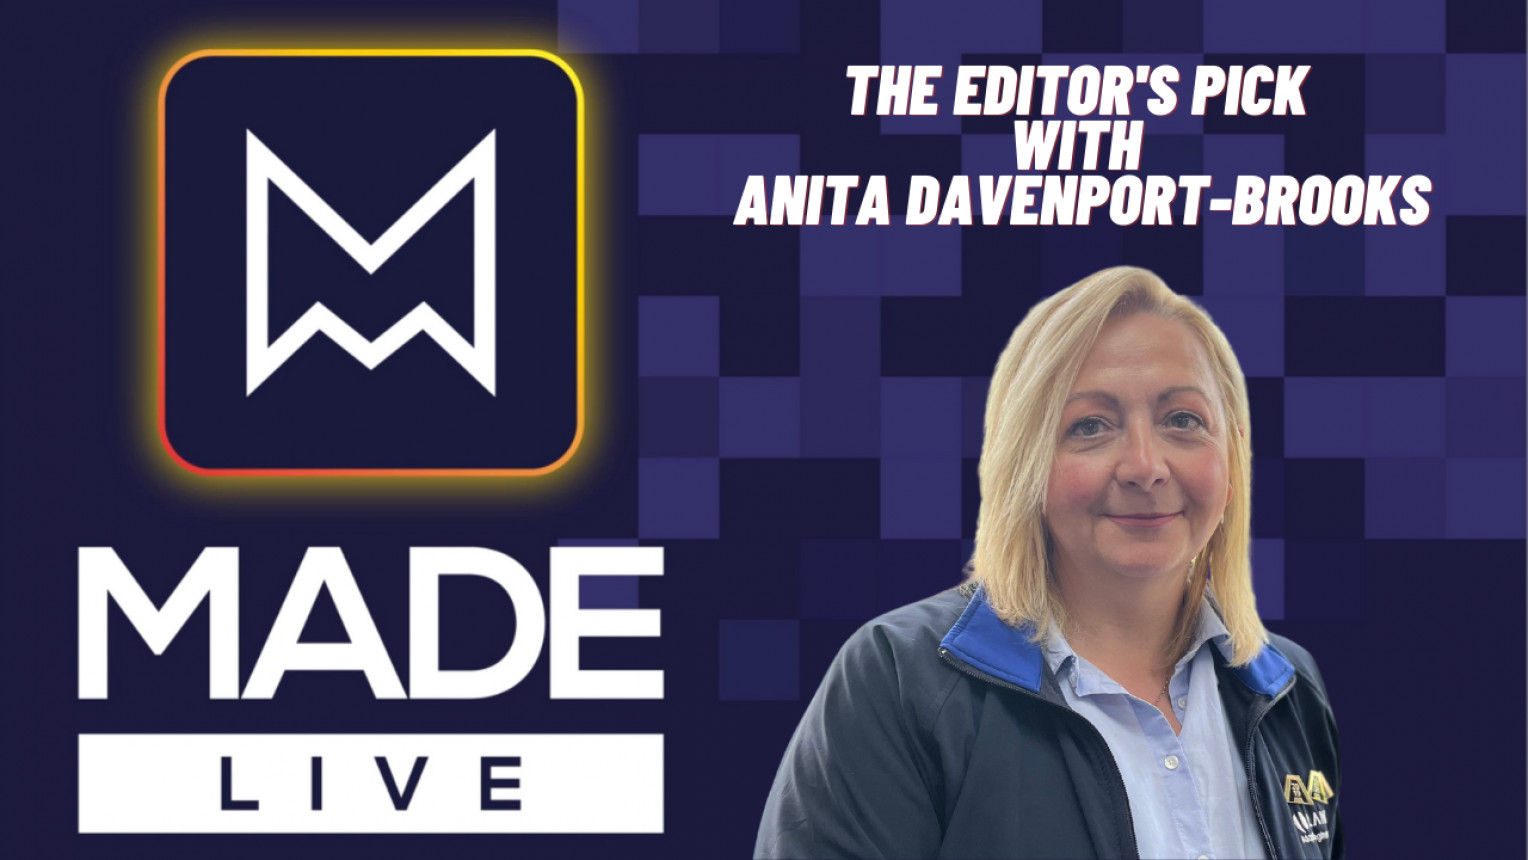 Made LIVE TV: The Editor's Pick with Anita Davenport-Brooks